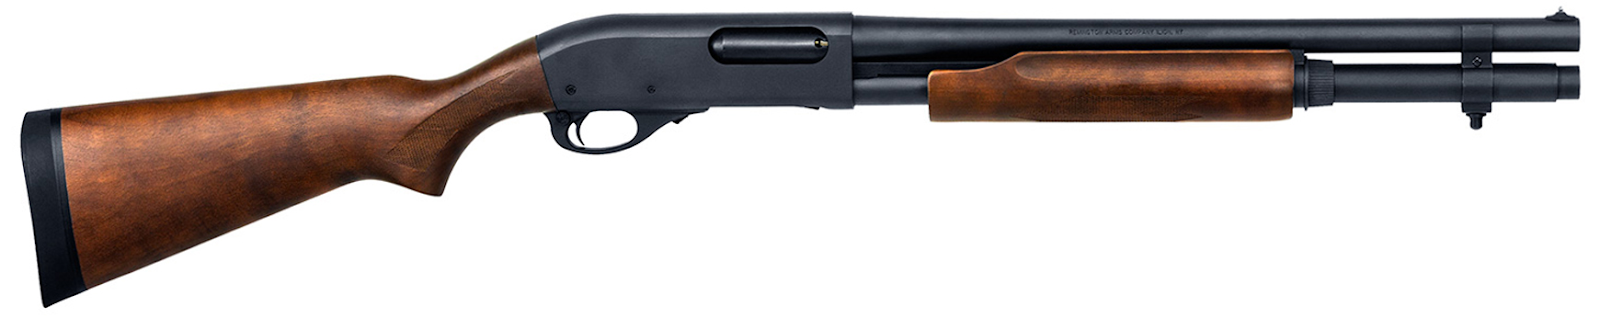 Remington 870 Home Defense Model